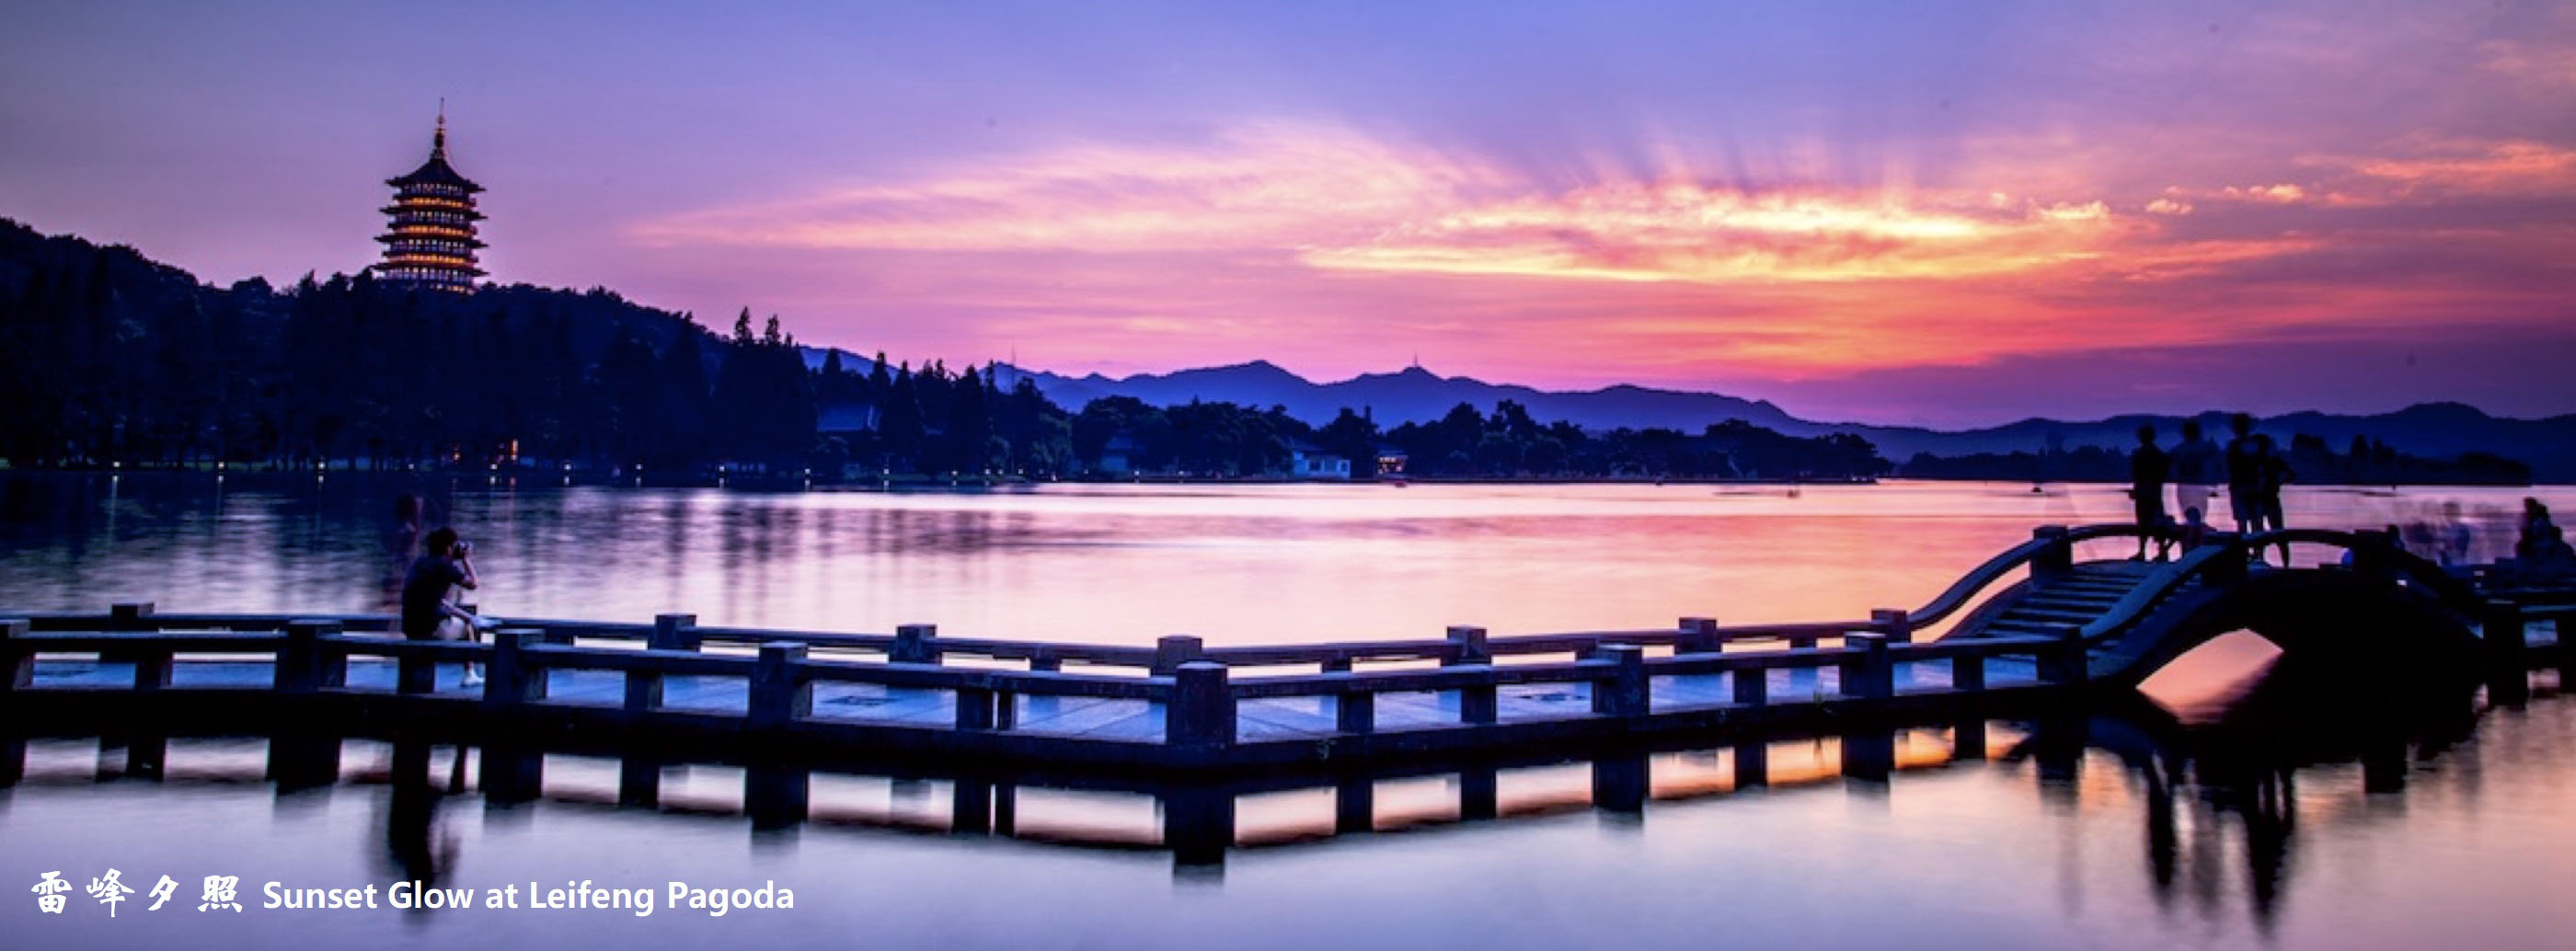 Photo of West Lake in Hangzhou